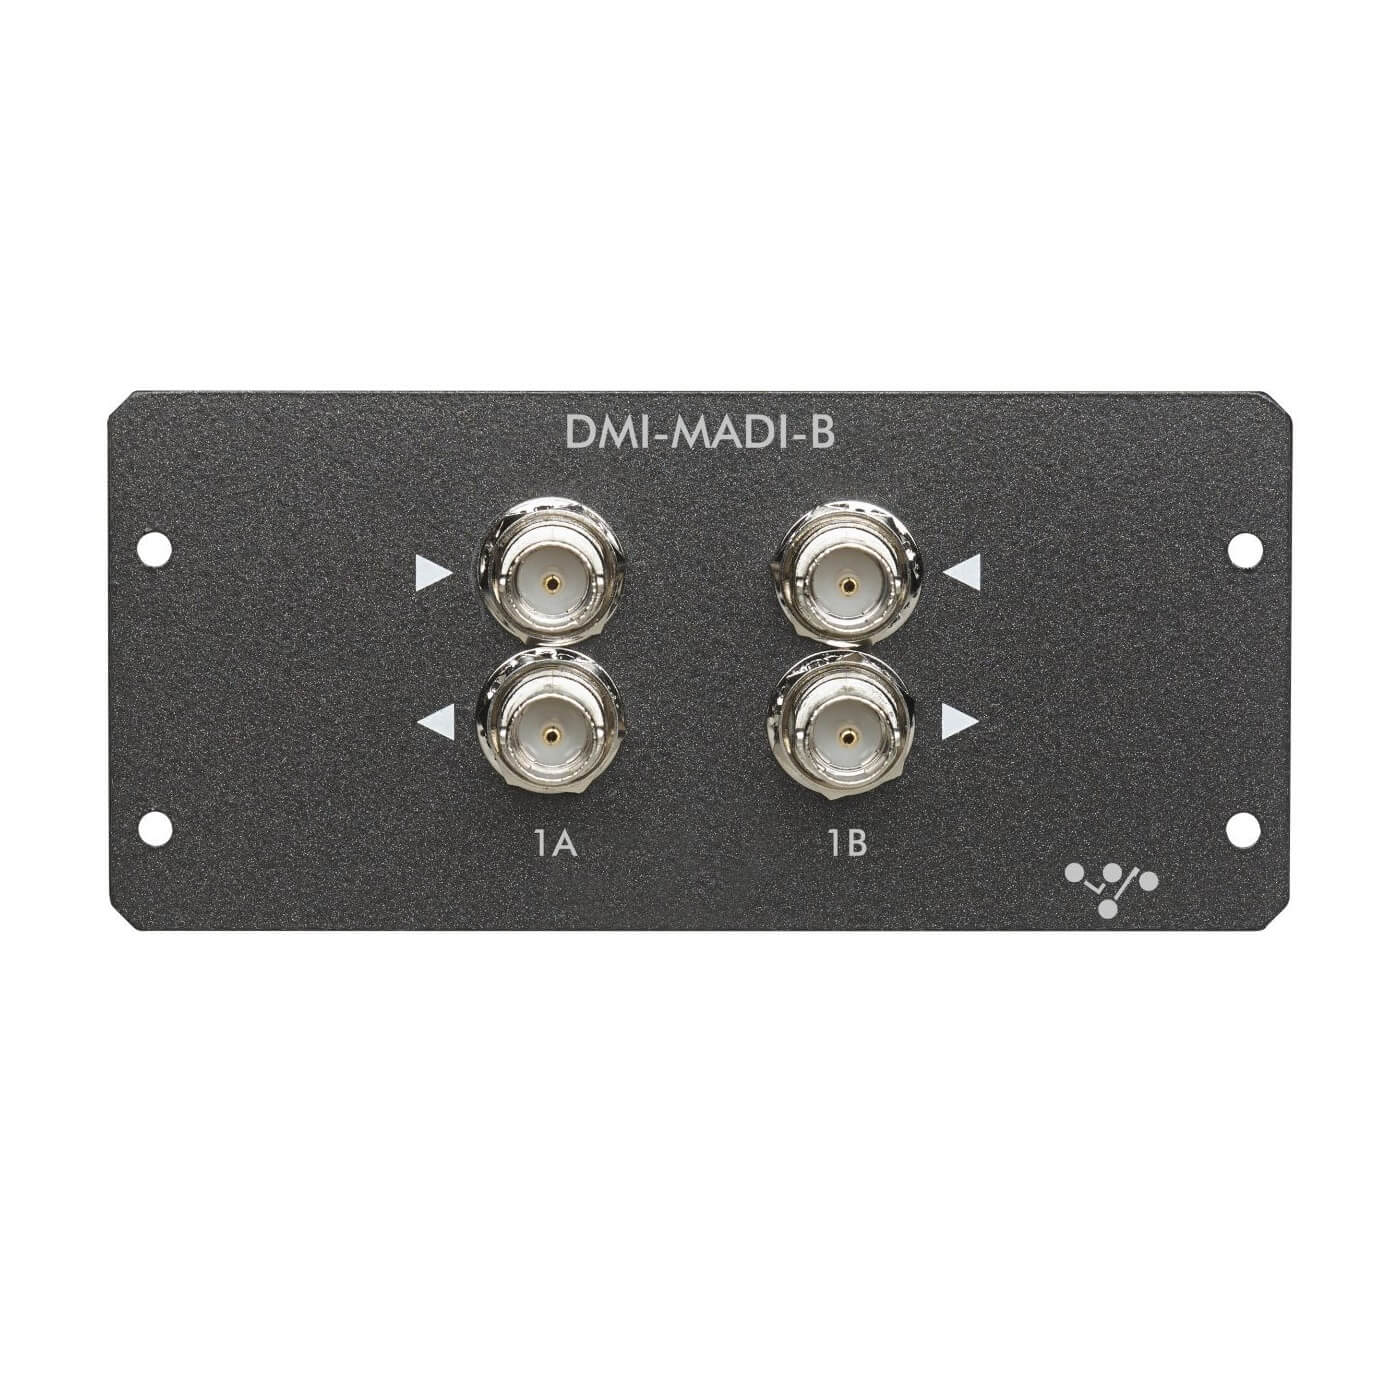 DiGiCo DMI-MADI-B Multi-channel Interface card